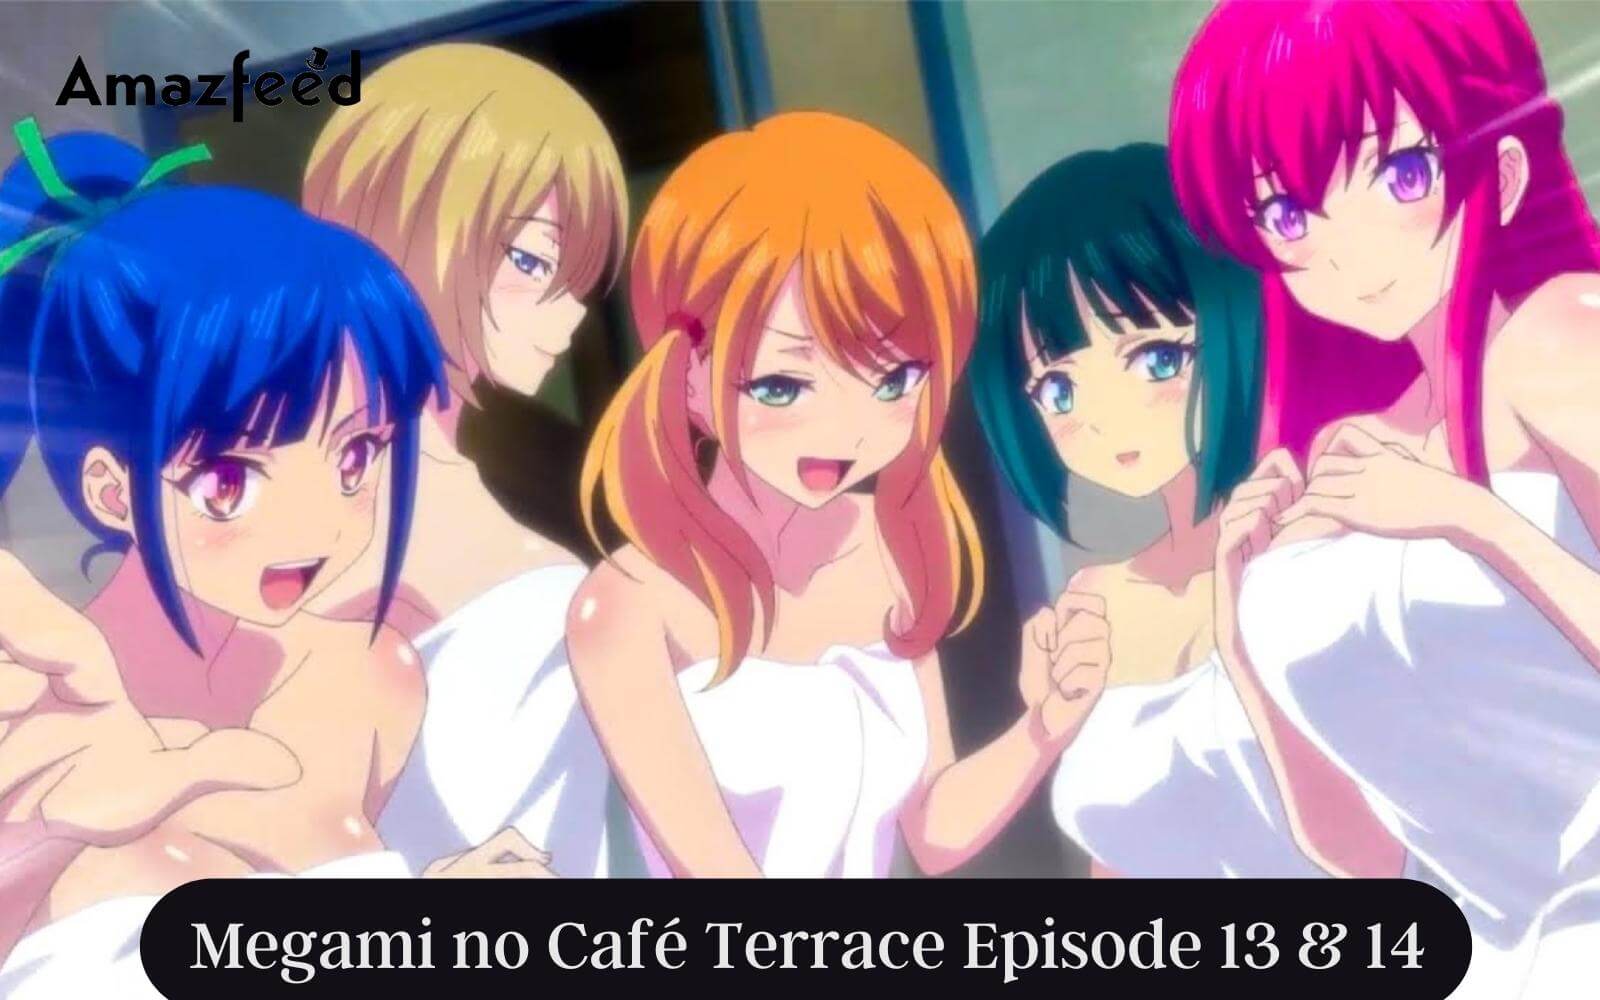 Megami no Café Terrace Season 2 Release Date, Spoiler, Recap, Trailer,  Cast, Countdown, and All We Know So Far » Amazfeed